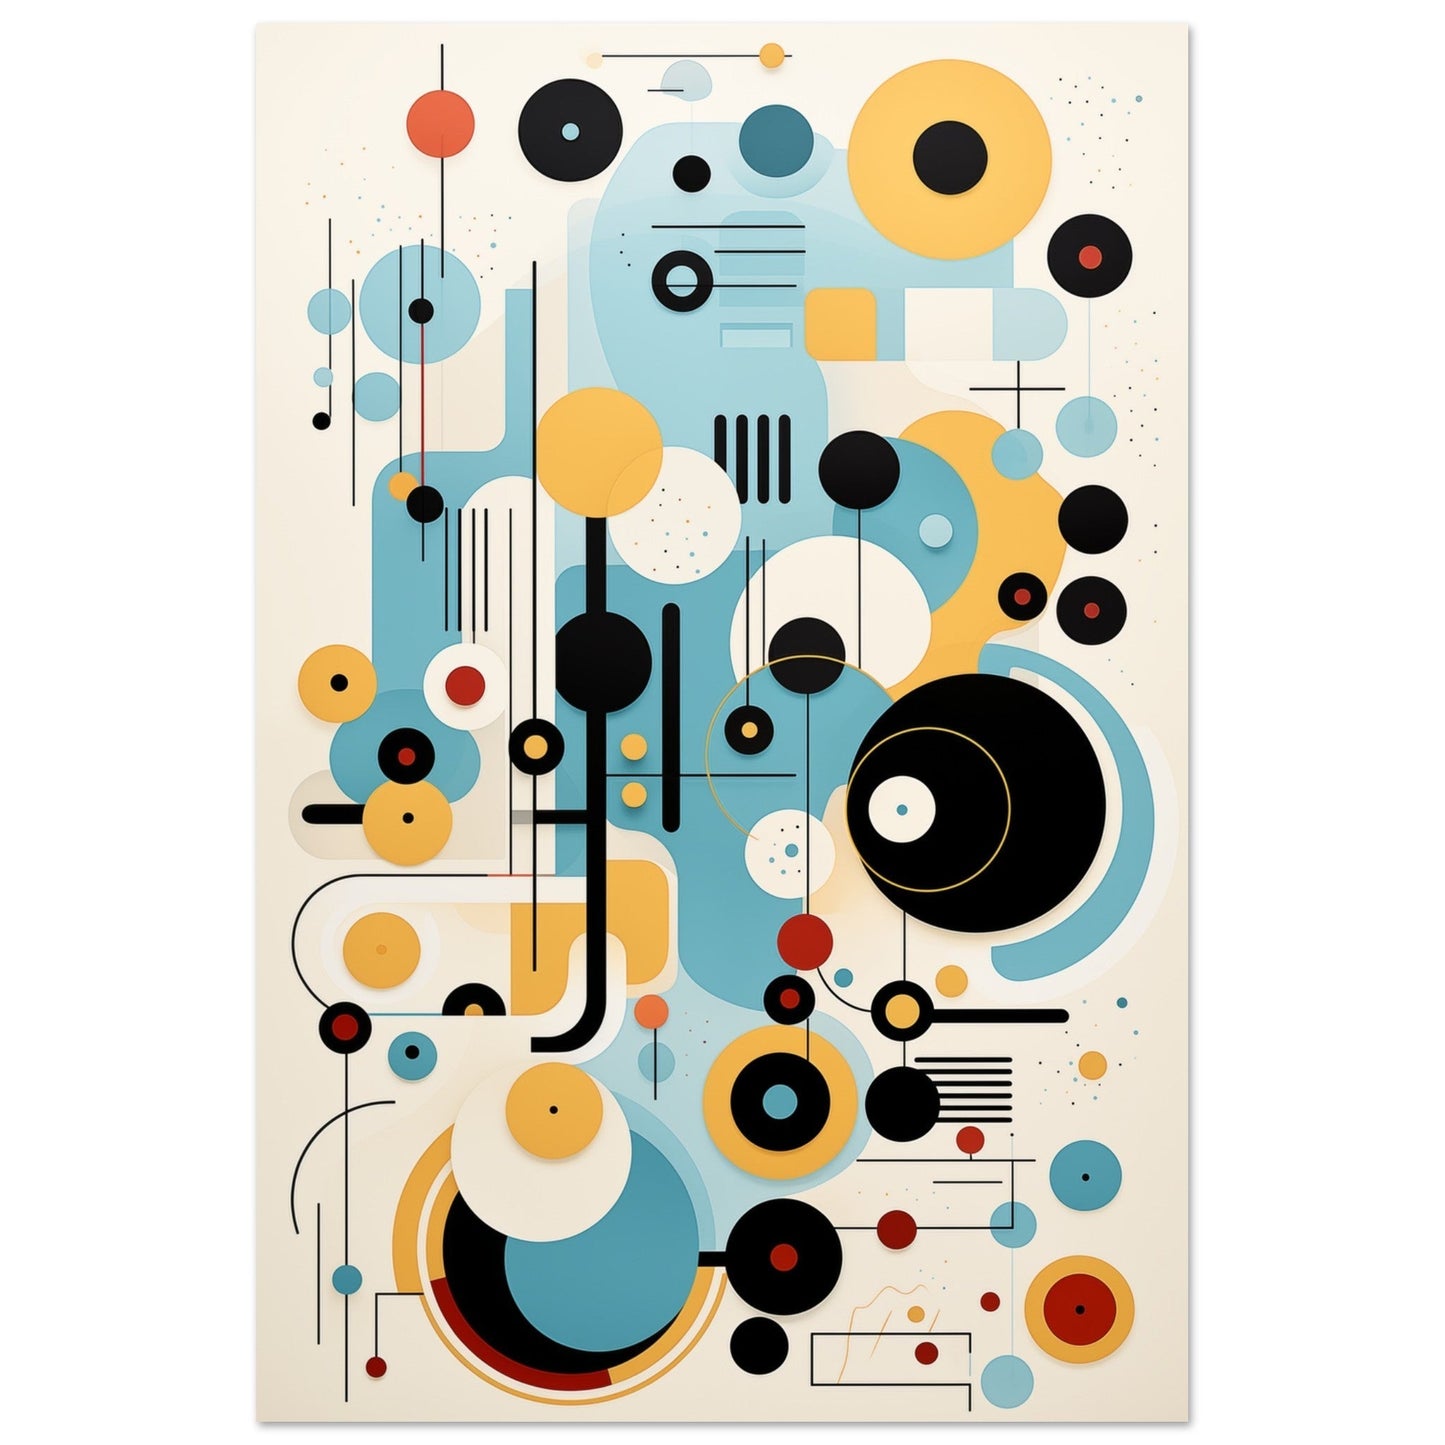 A Pop Art Rhythmic Patterns art print with circles and circles.